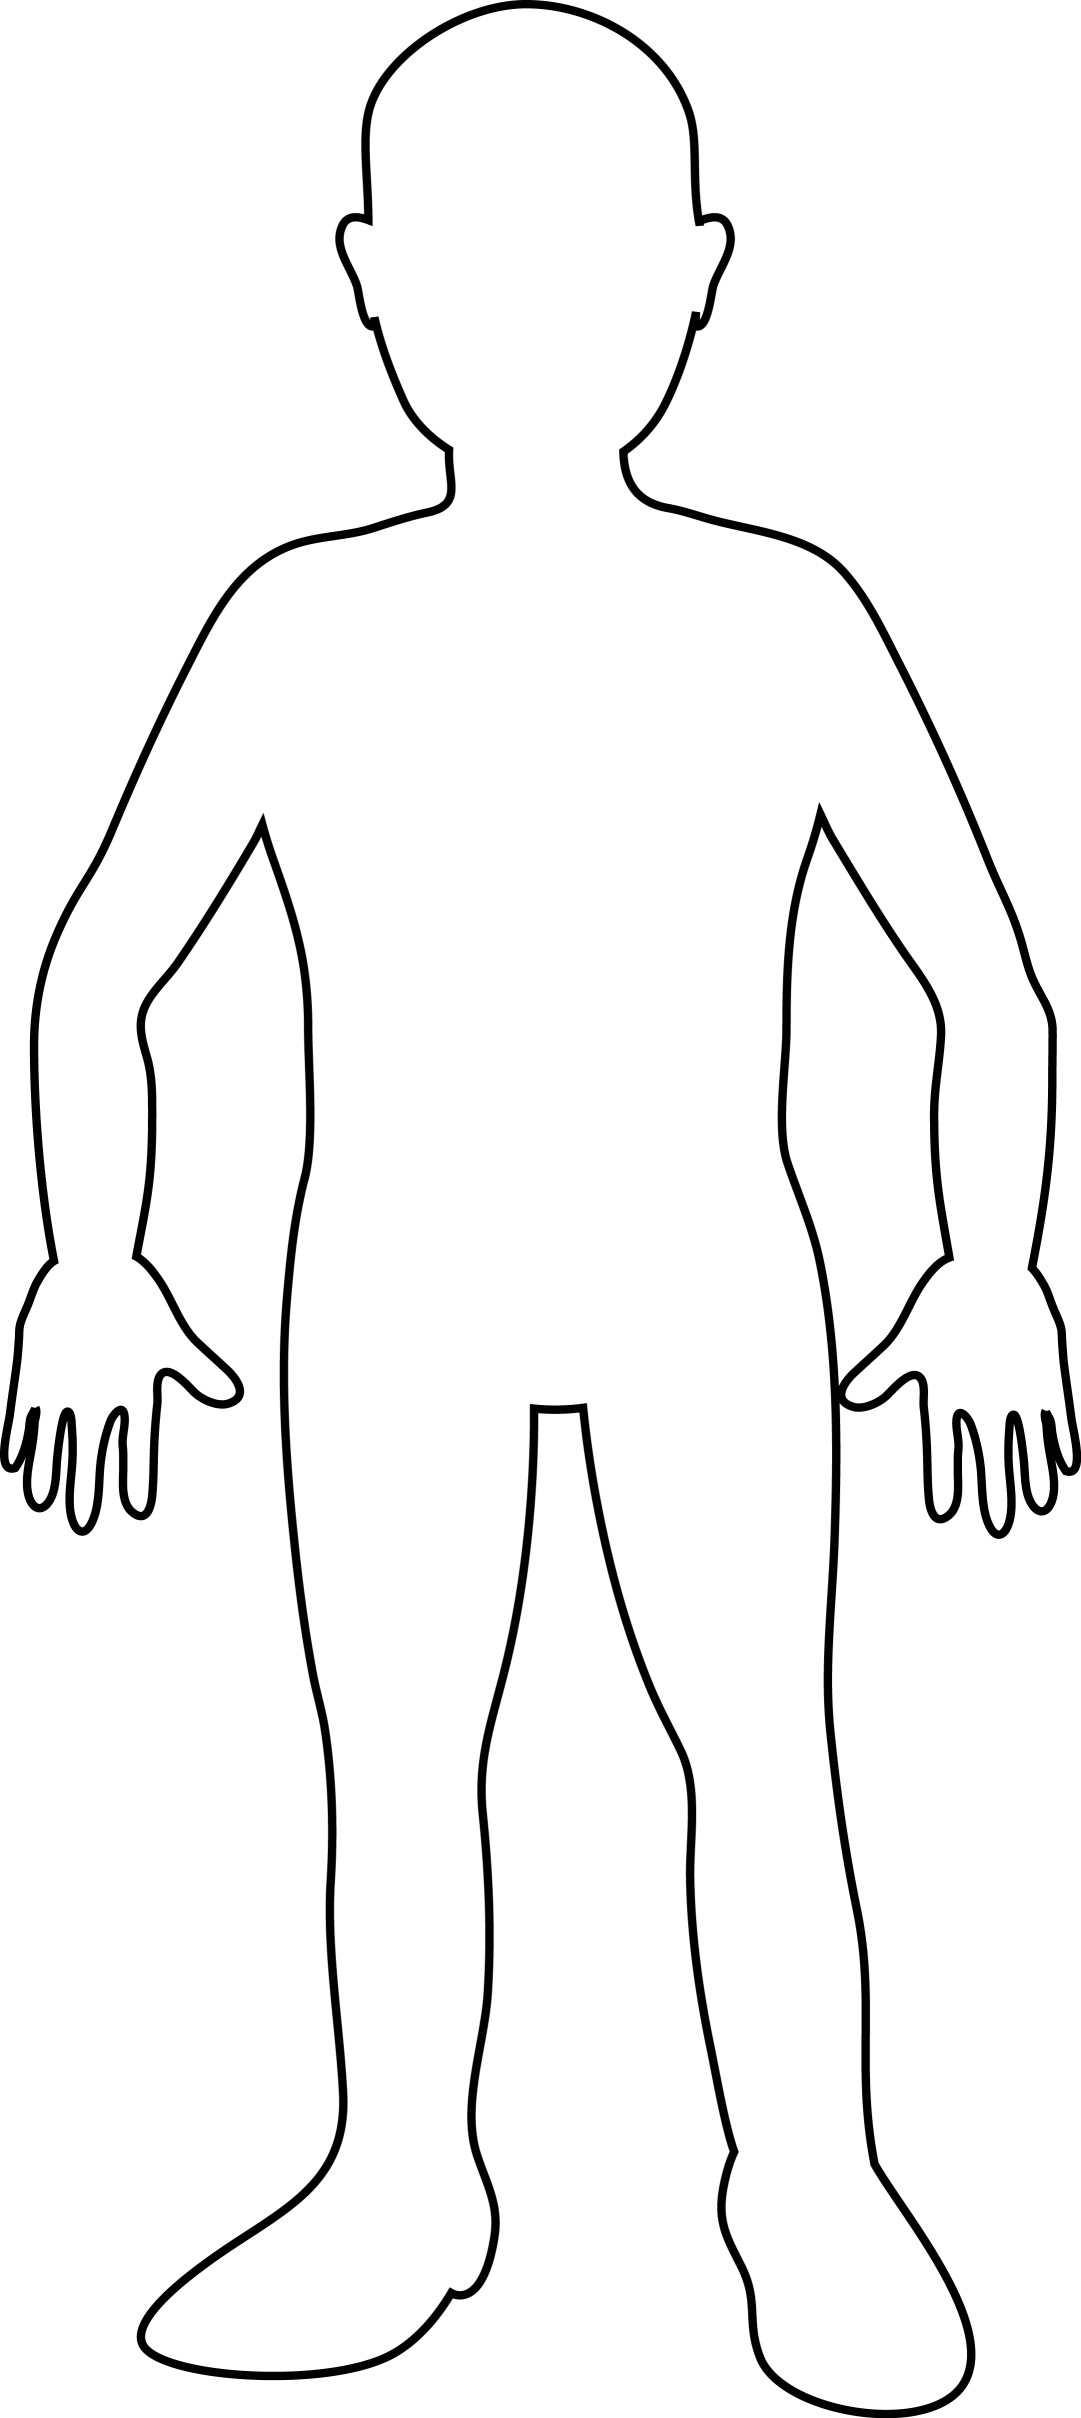 Blank Human Body Clipart - Human Body Clipart